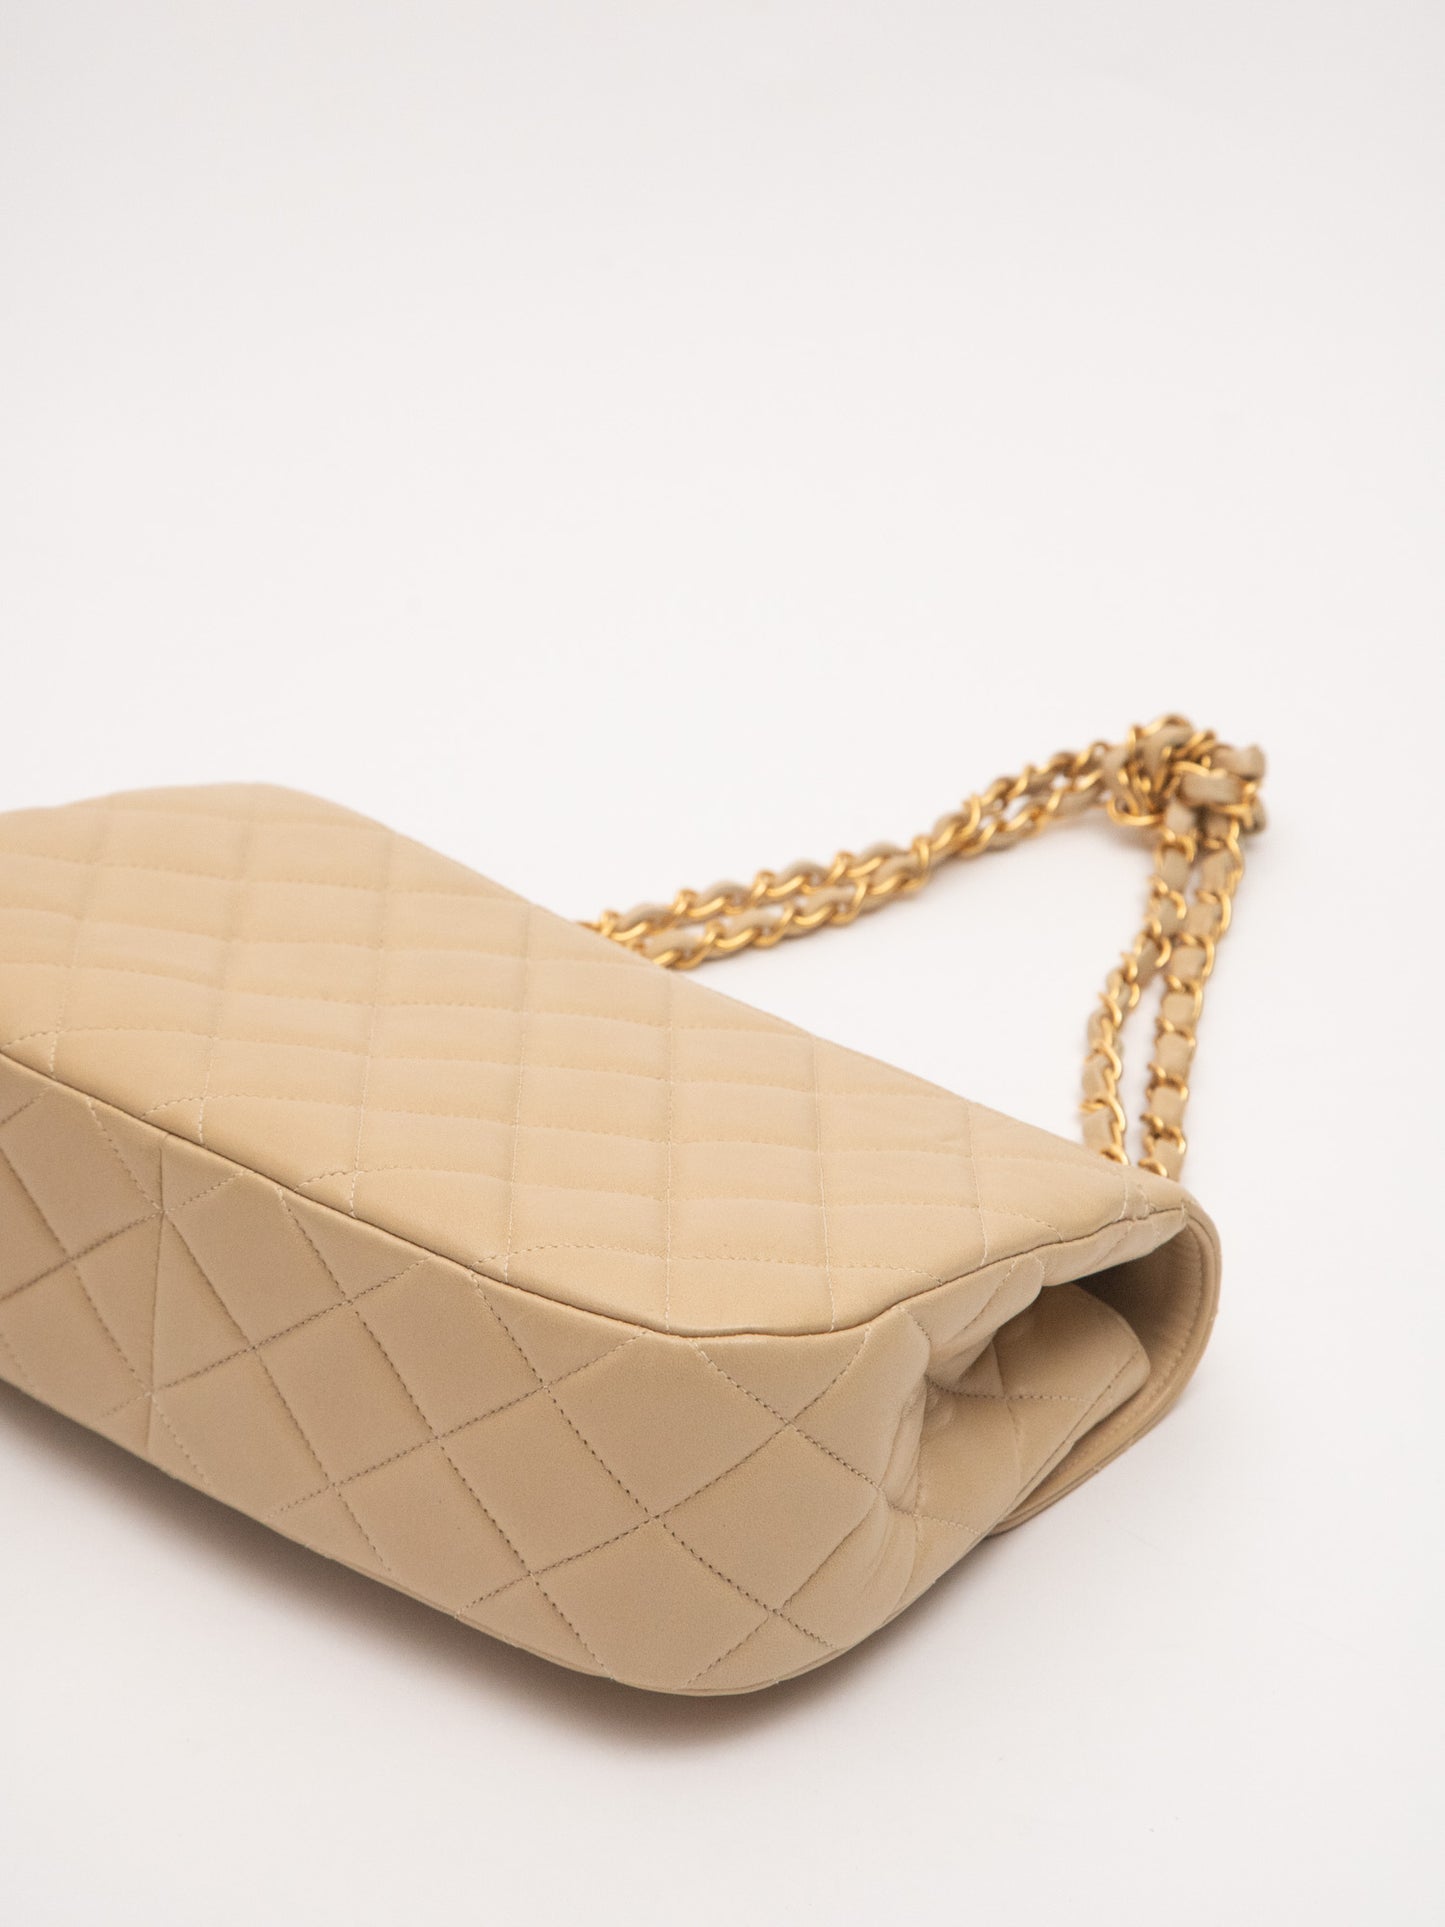 Chanel V flap matelasse handbag lambskin beige